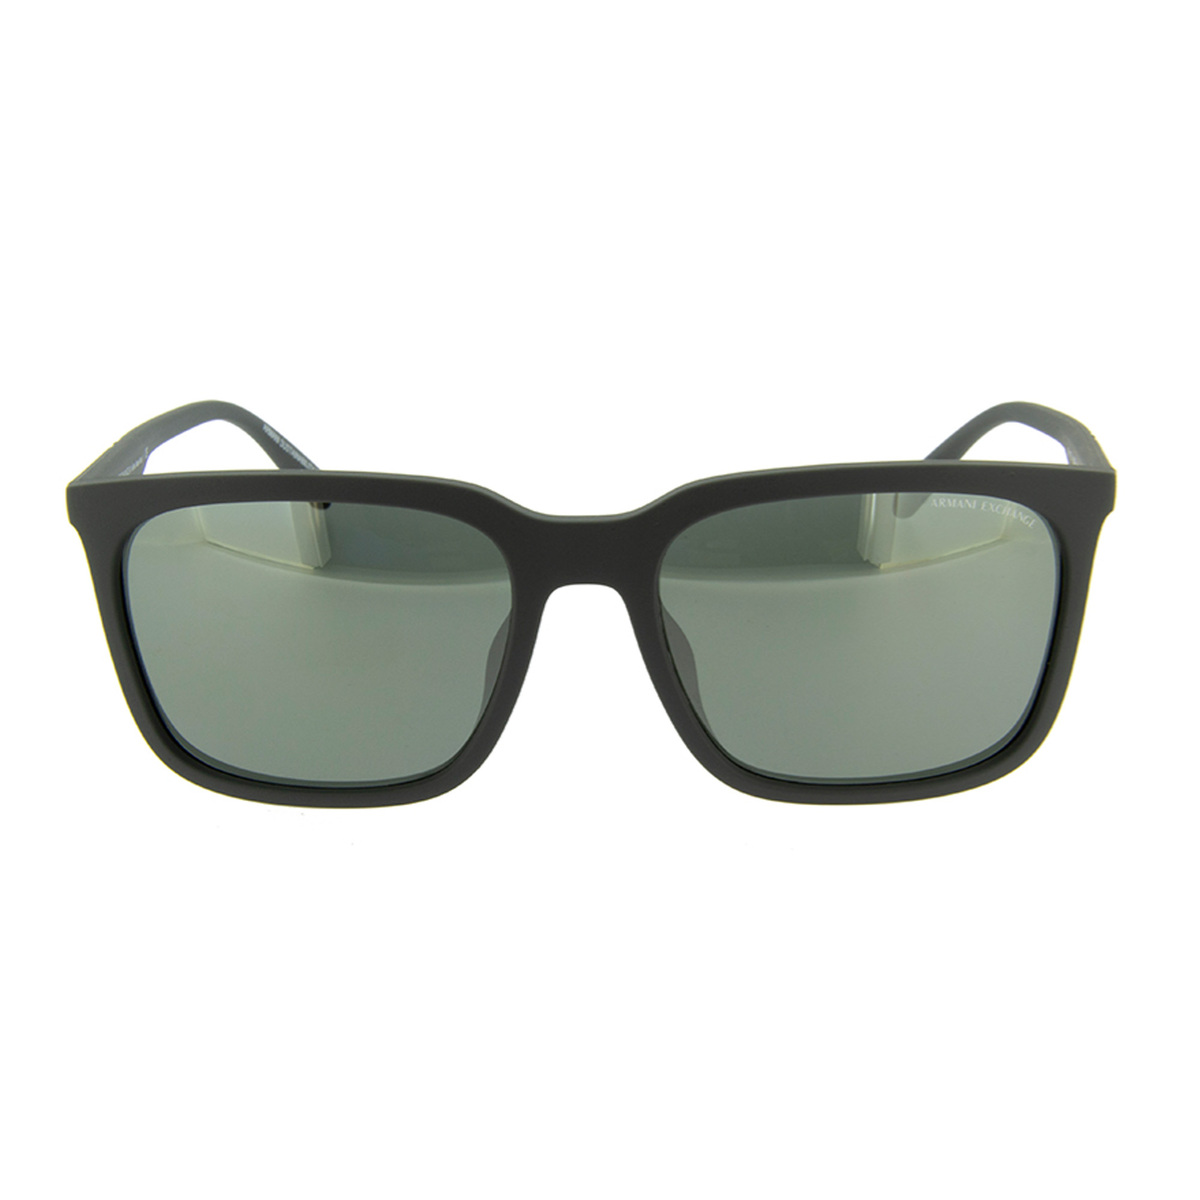 Armani Exchange Rectangle Men's Sunglasses, Black, 4117SU-81806G